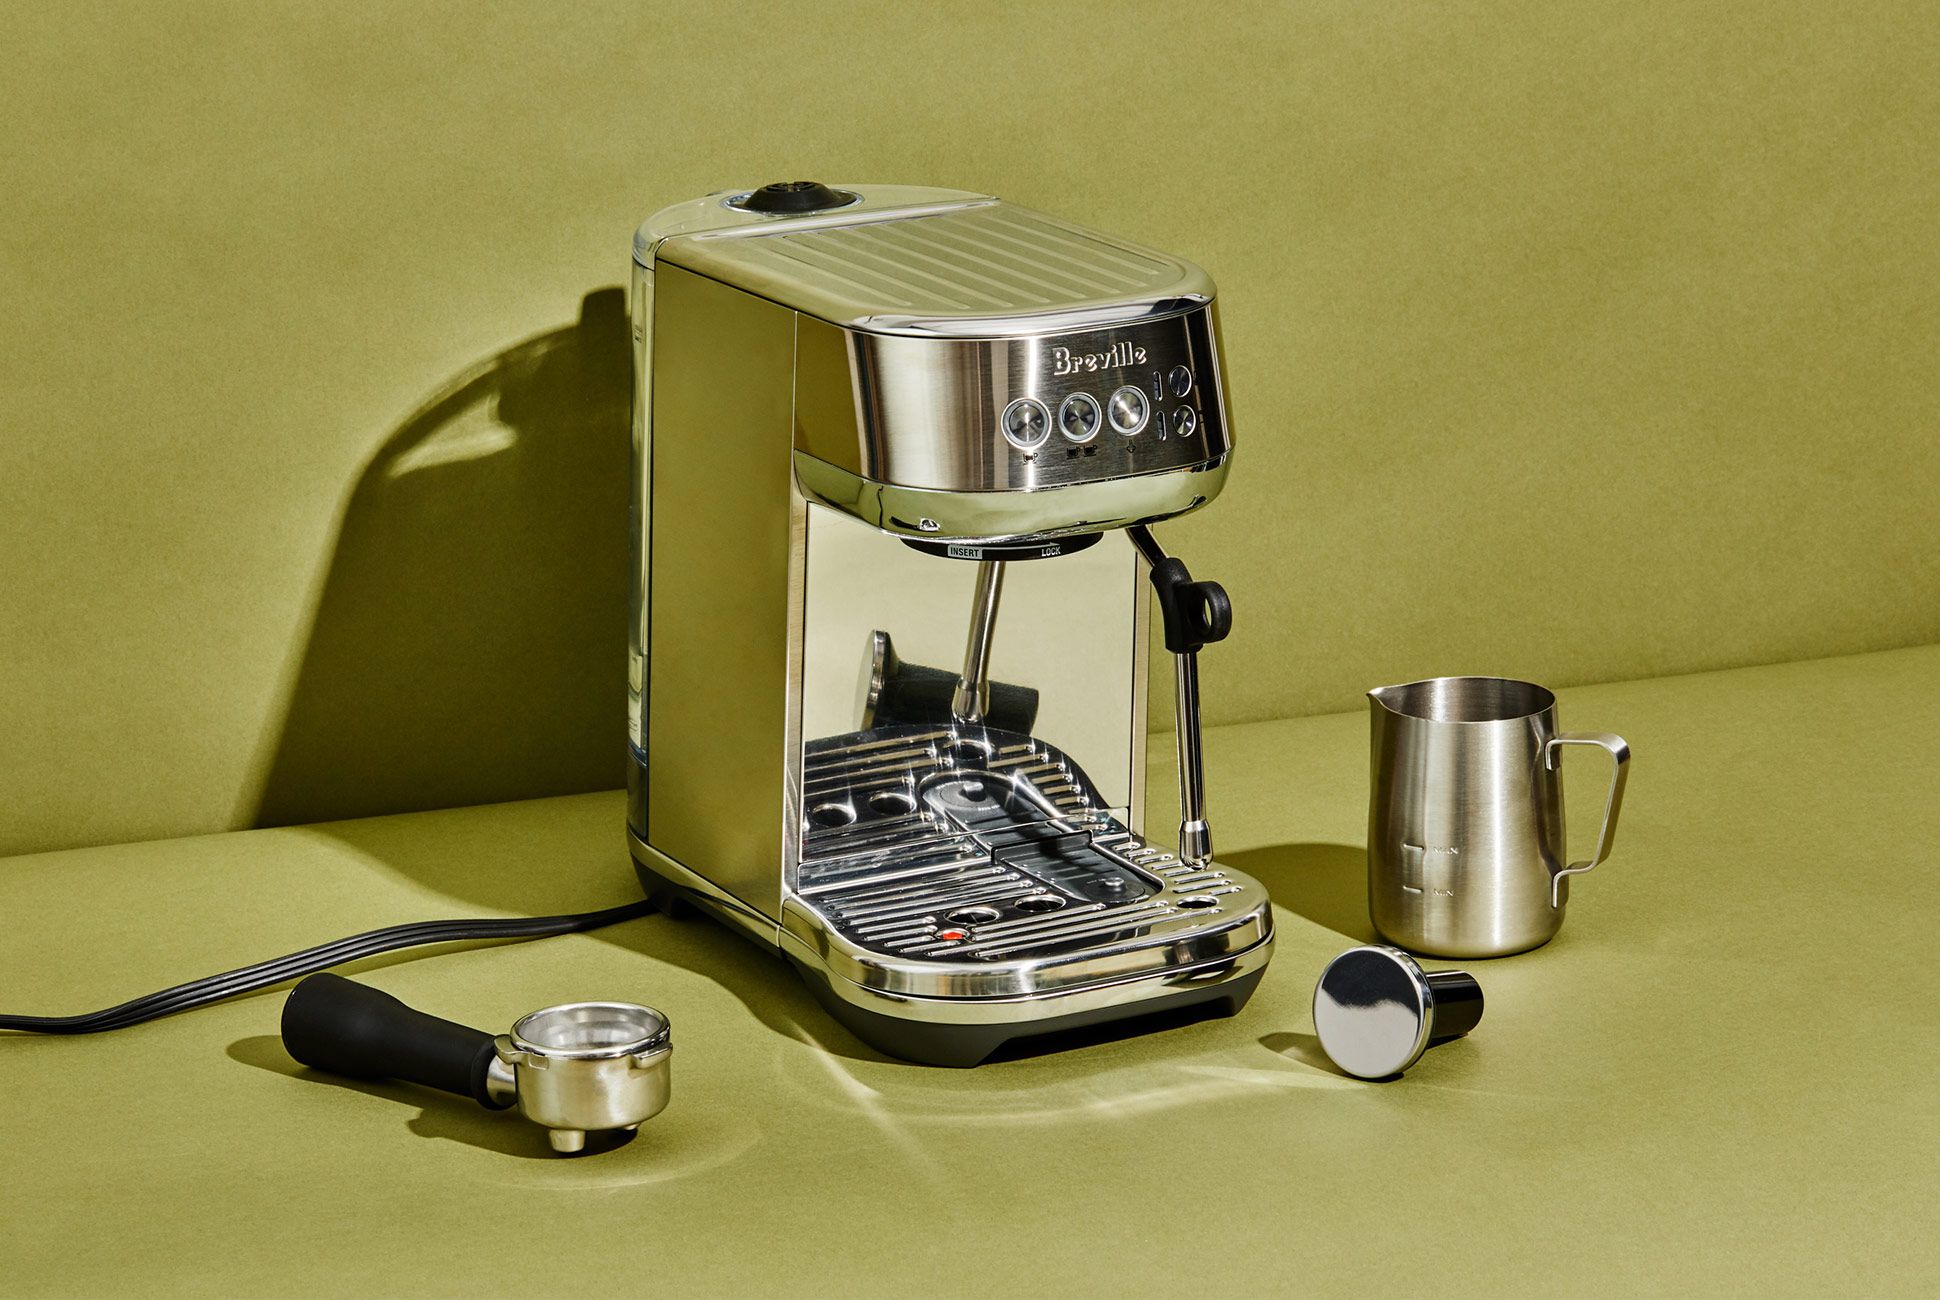 Breville Bambino Plus Review: A Compact Espresso Machine That